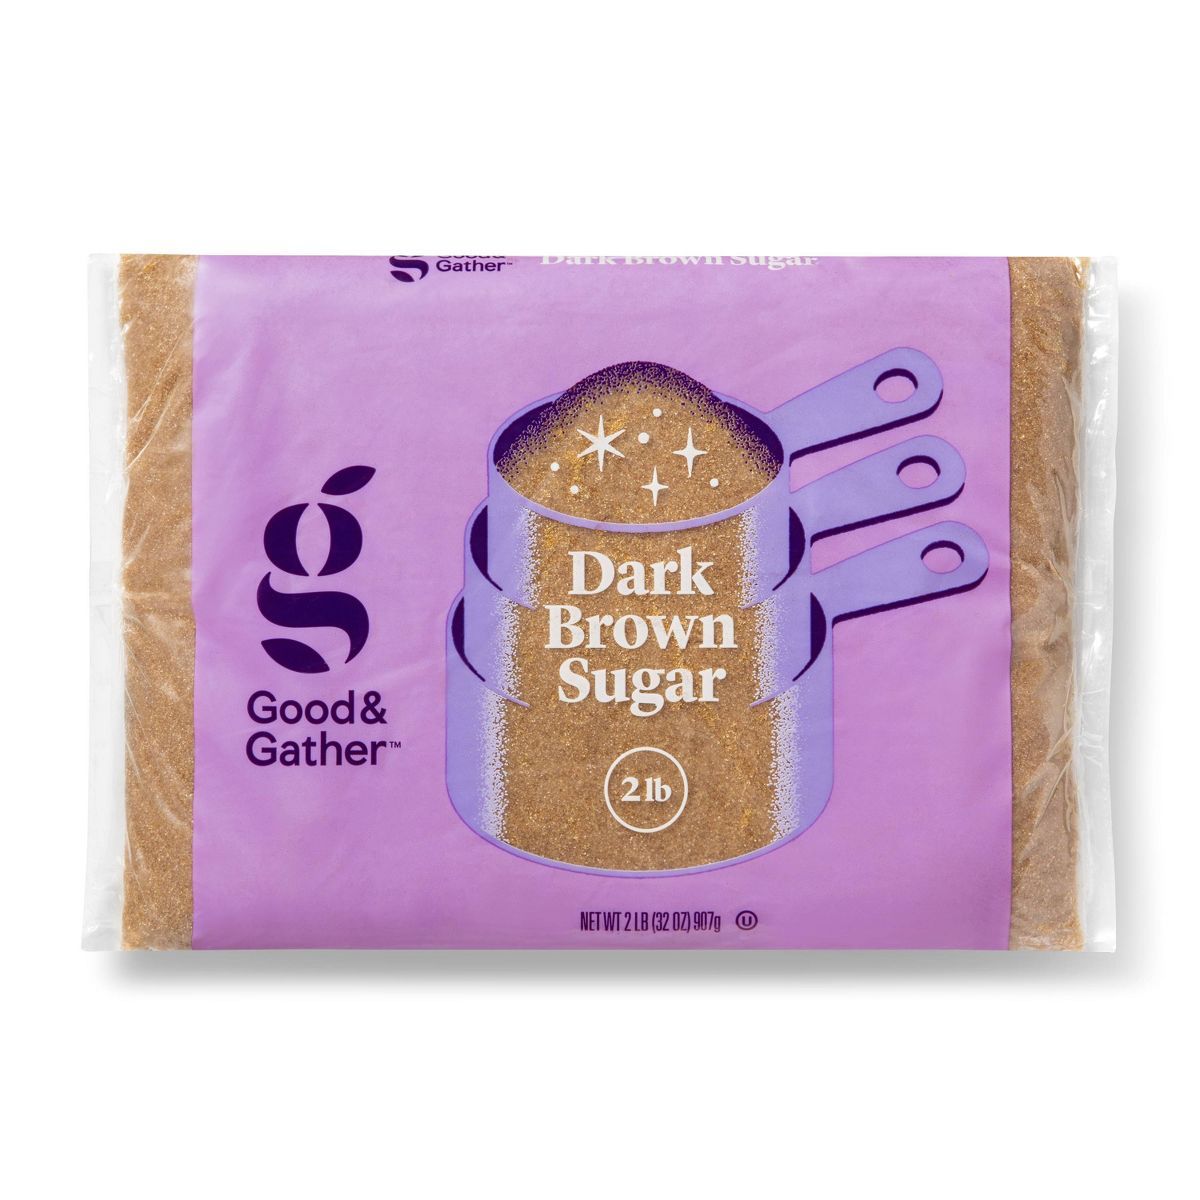 Dark Brown Sugar - 2lbs - Good & Gather™ | Target